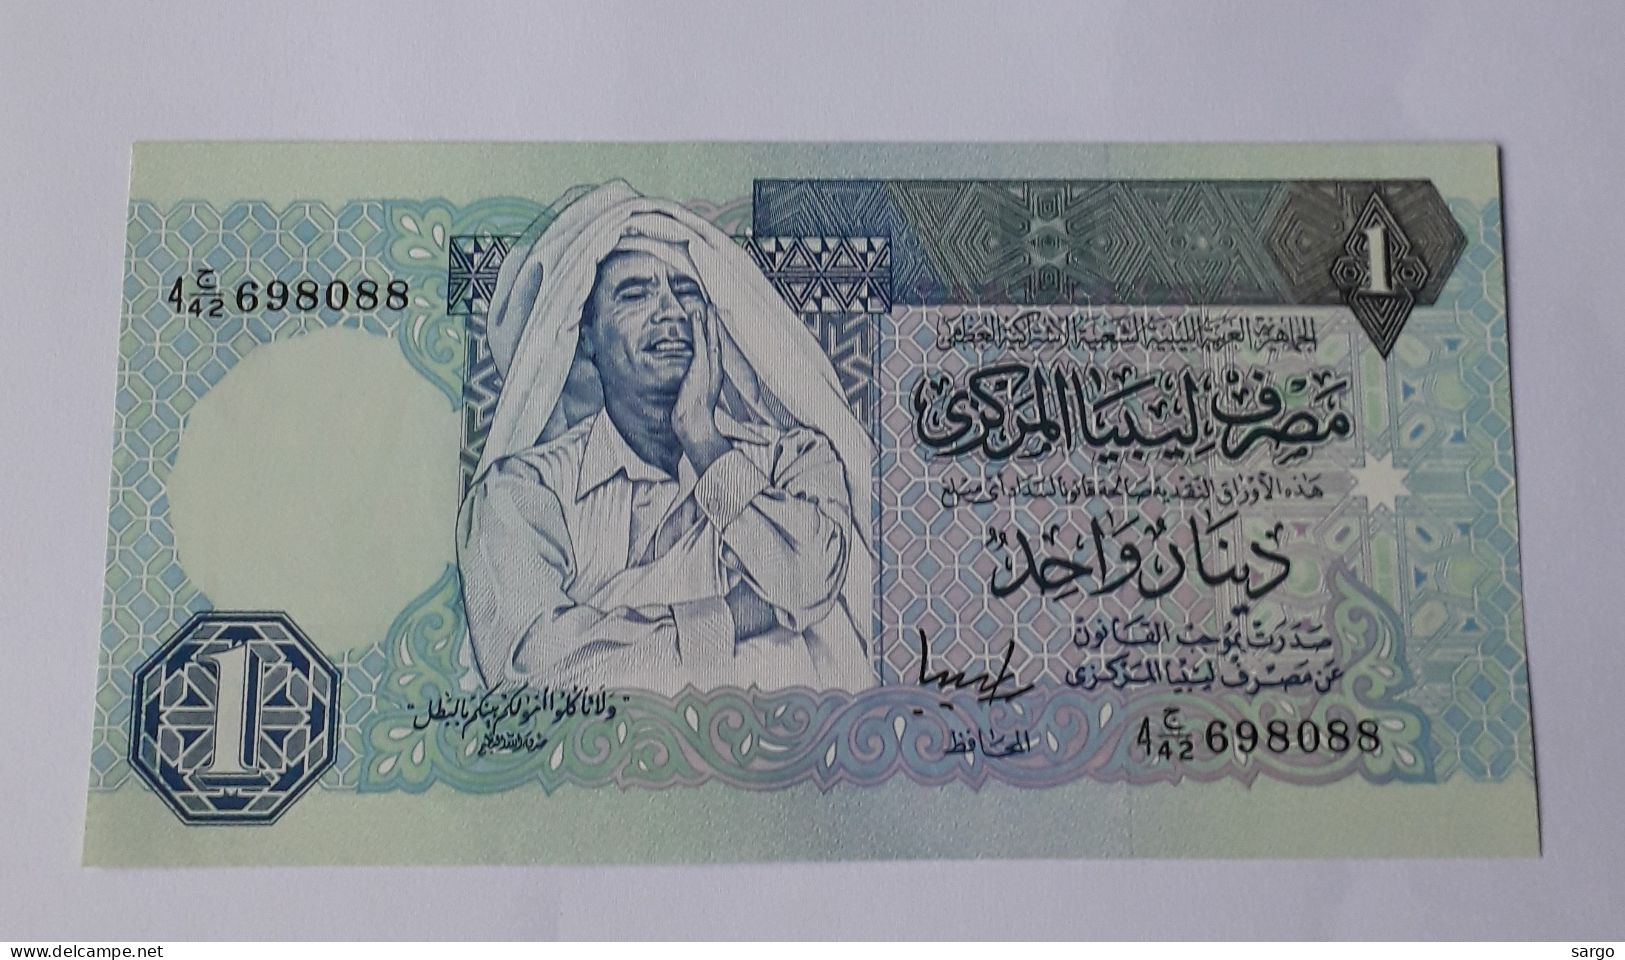 LIBYA - 1 DINAR - 1991 -  P 59b  - UNC - BANKNOTES - PAPER MONEY - CARTAMONETA - - Libya